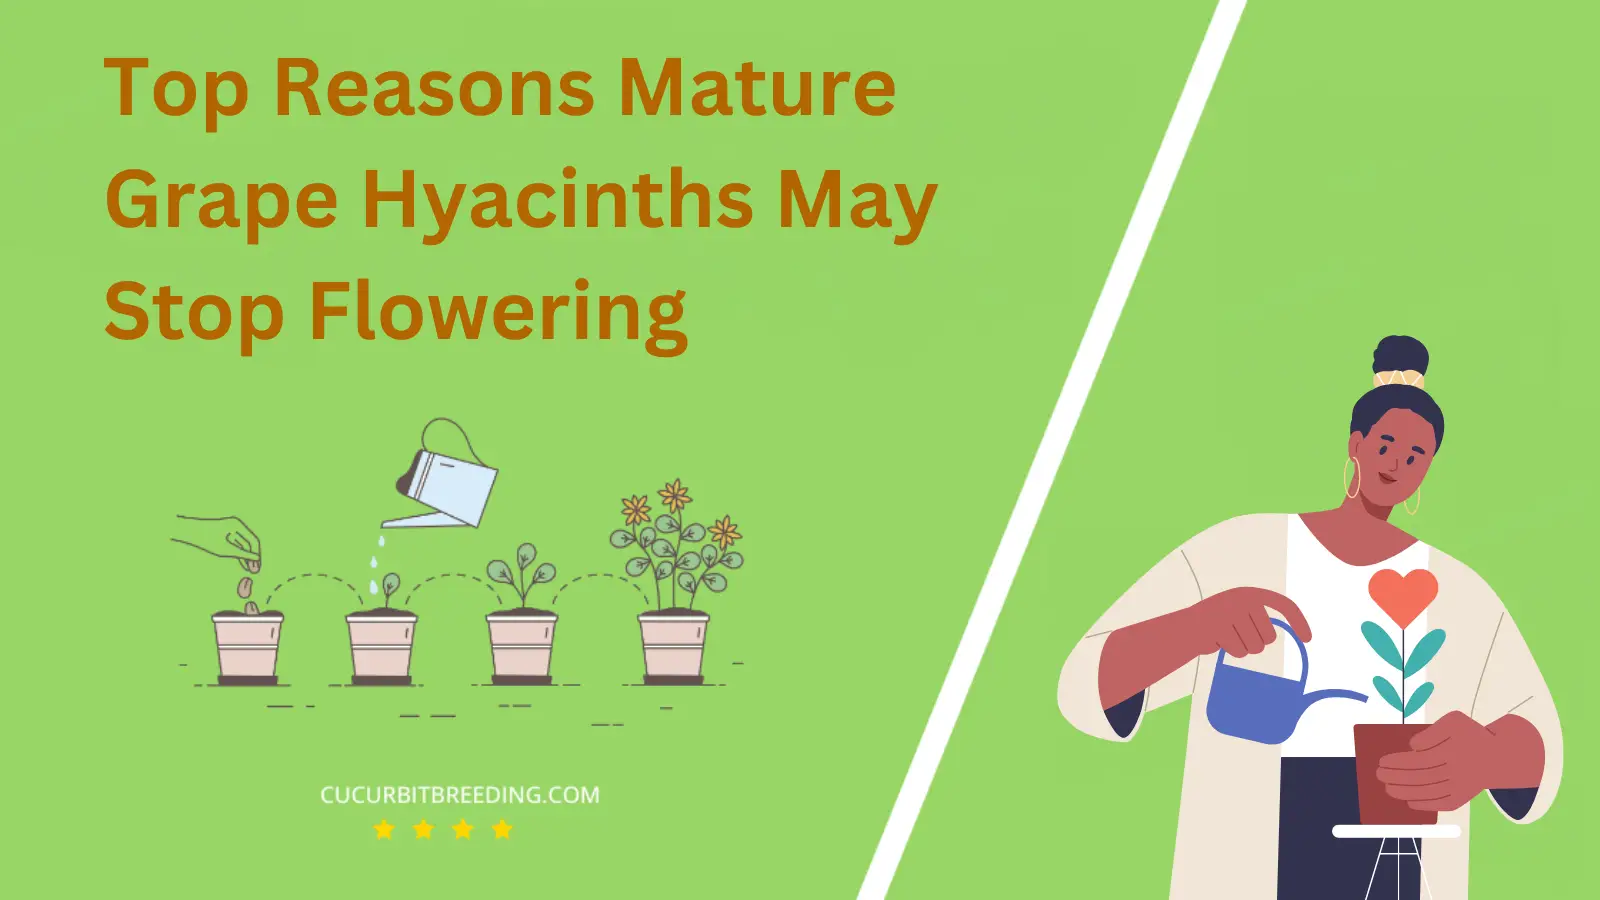 Top Reasons Mature Grape Hyacinths May Stop Flowering